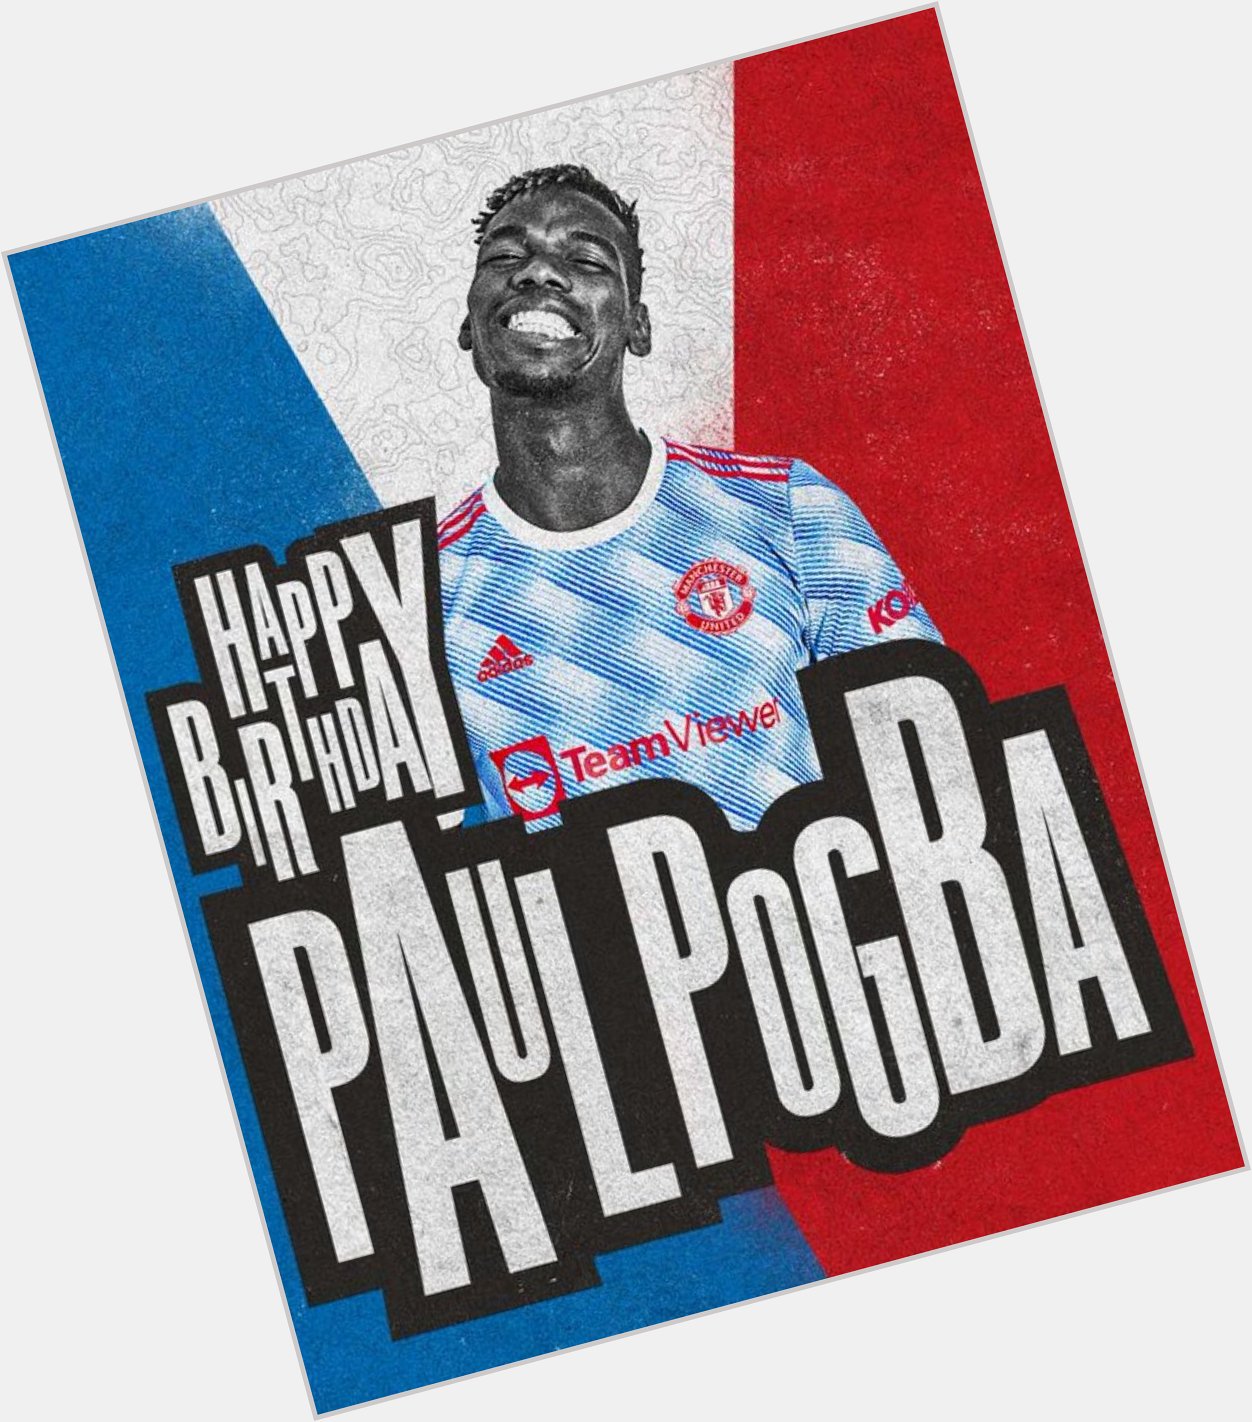 Happy birthday to you Paul pogba 